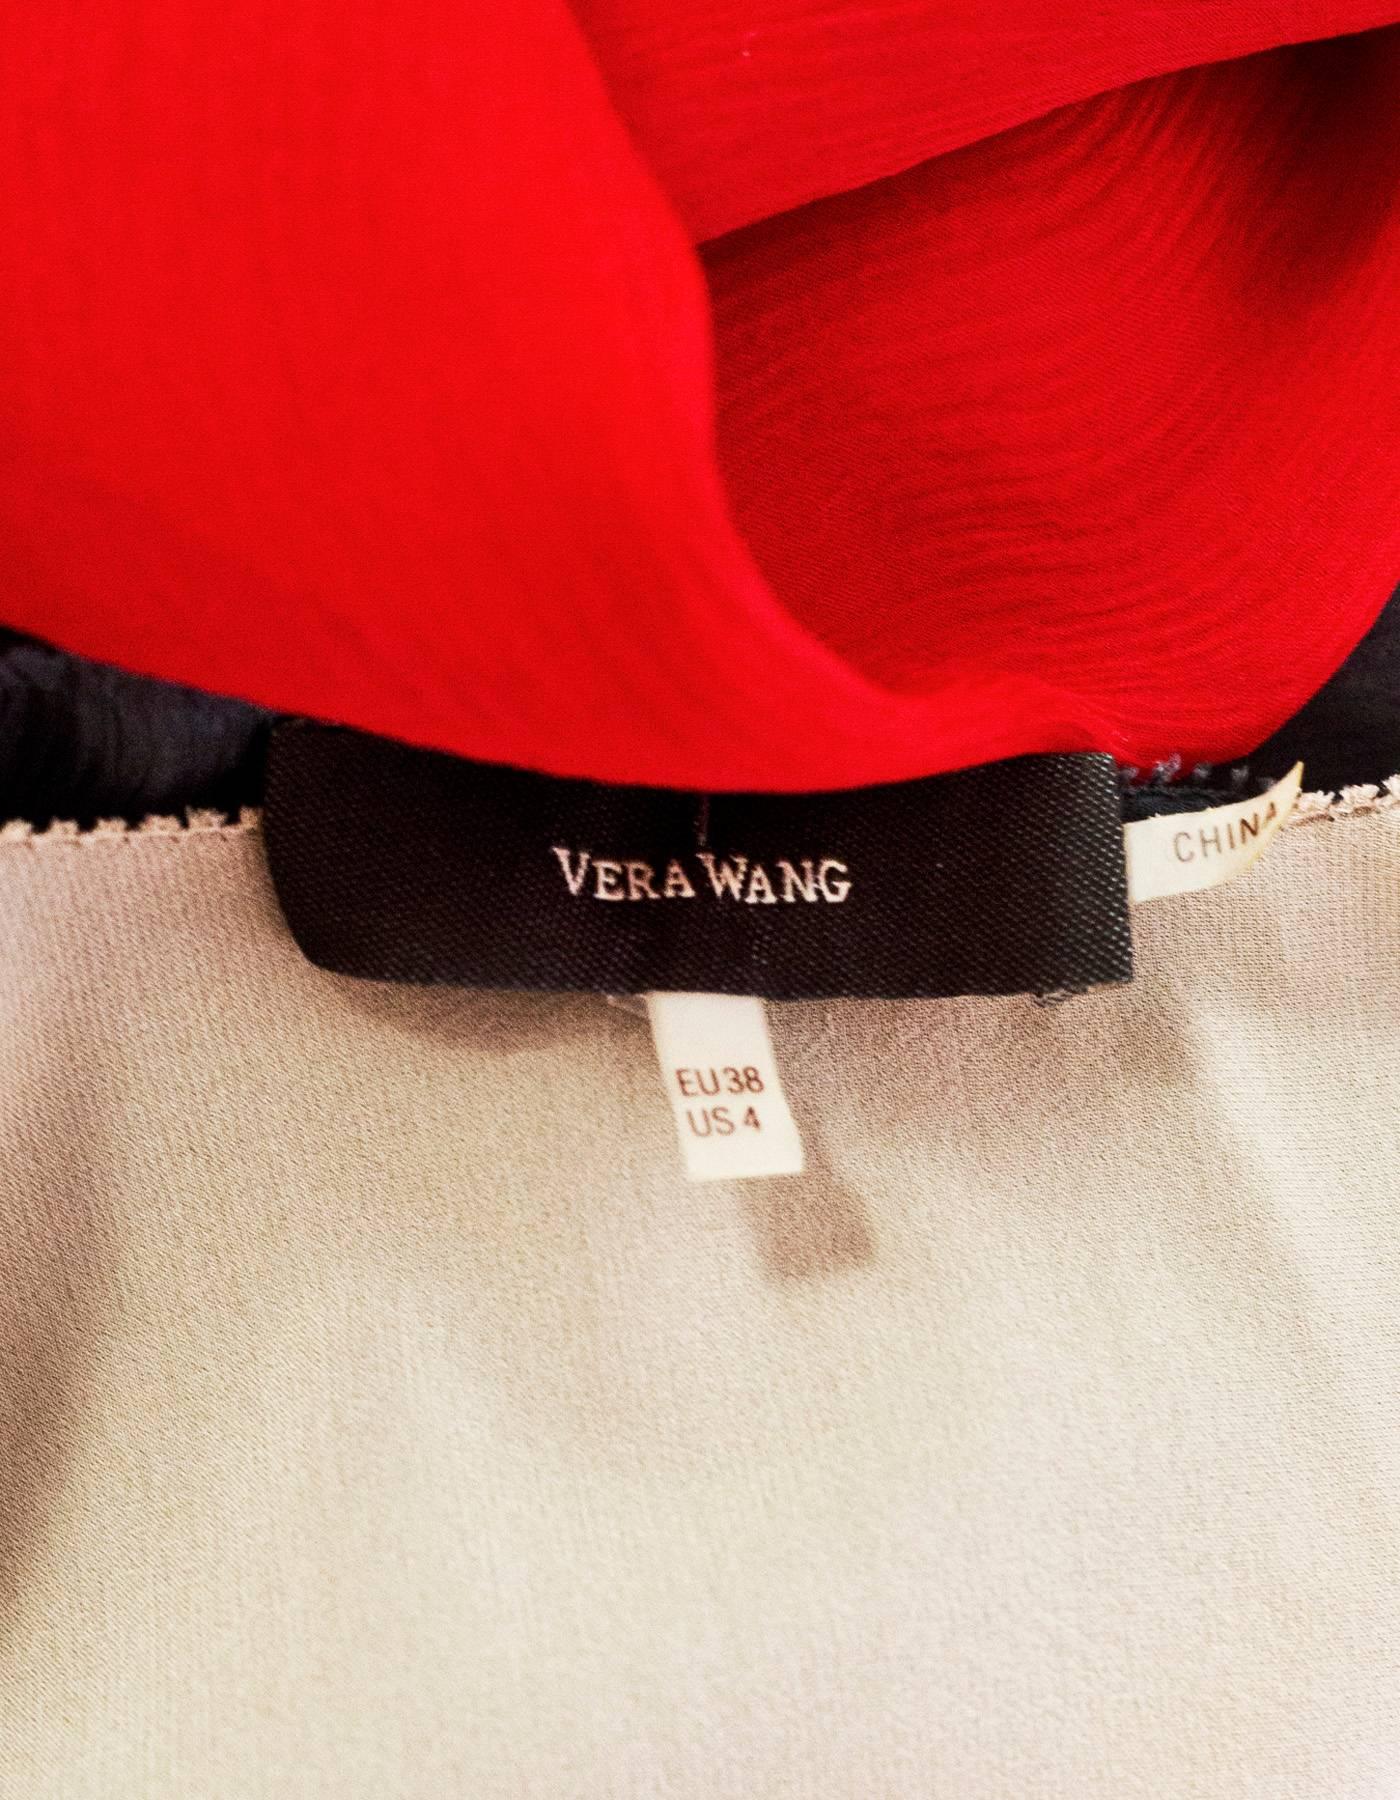 Women's Vera Wang Grey & Red Color Block Sleeveless Tunic Top sz US4